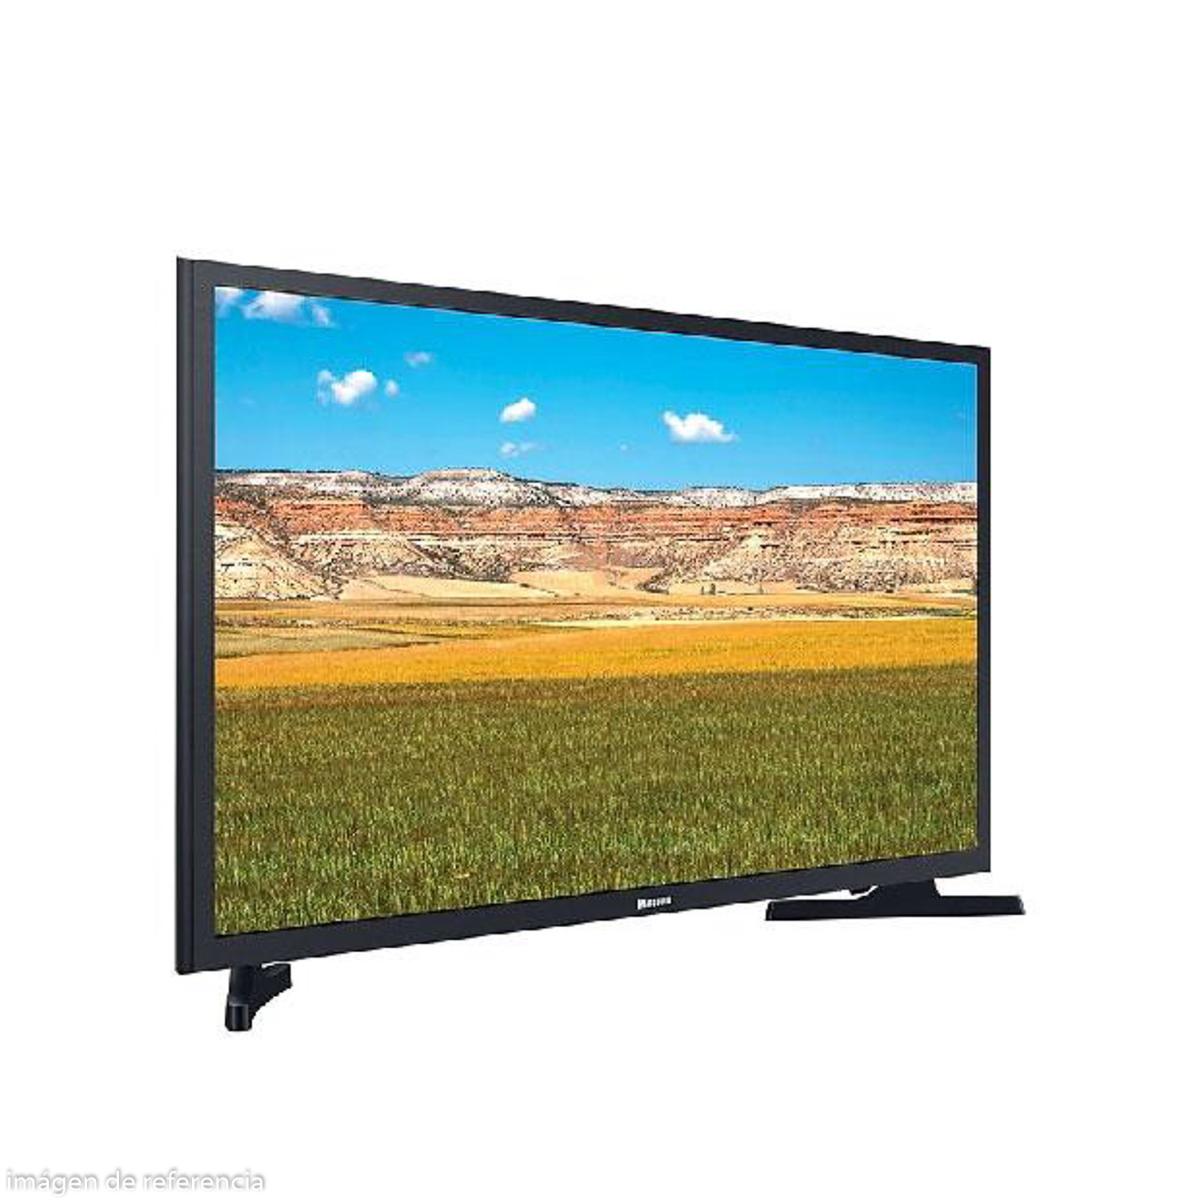 TV SAMSUNG LED 32" SMART HD